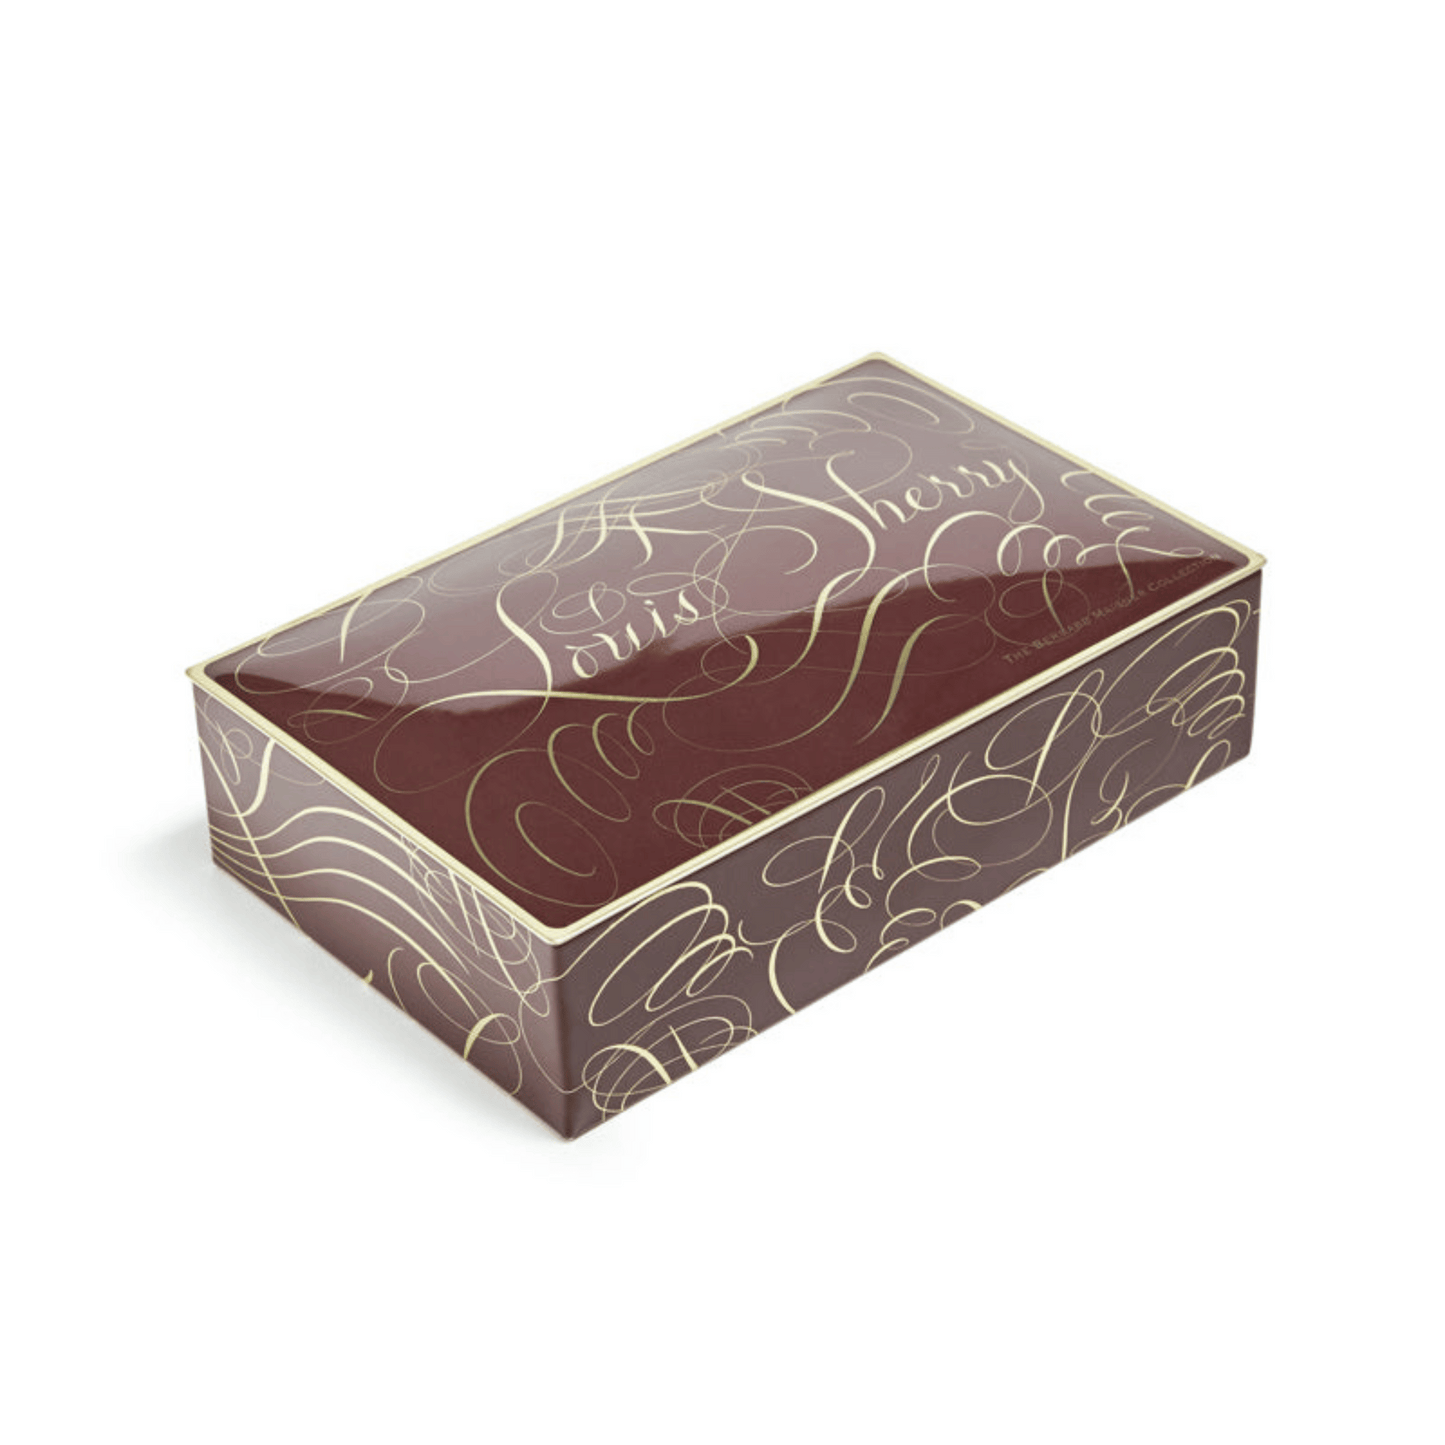 Primary Image of Bernard Maisner Calligraphy Chocolate Tin